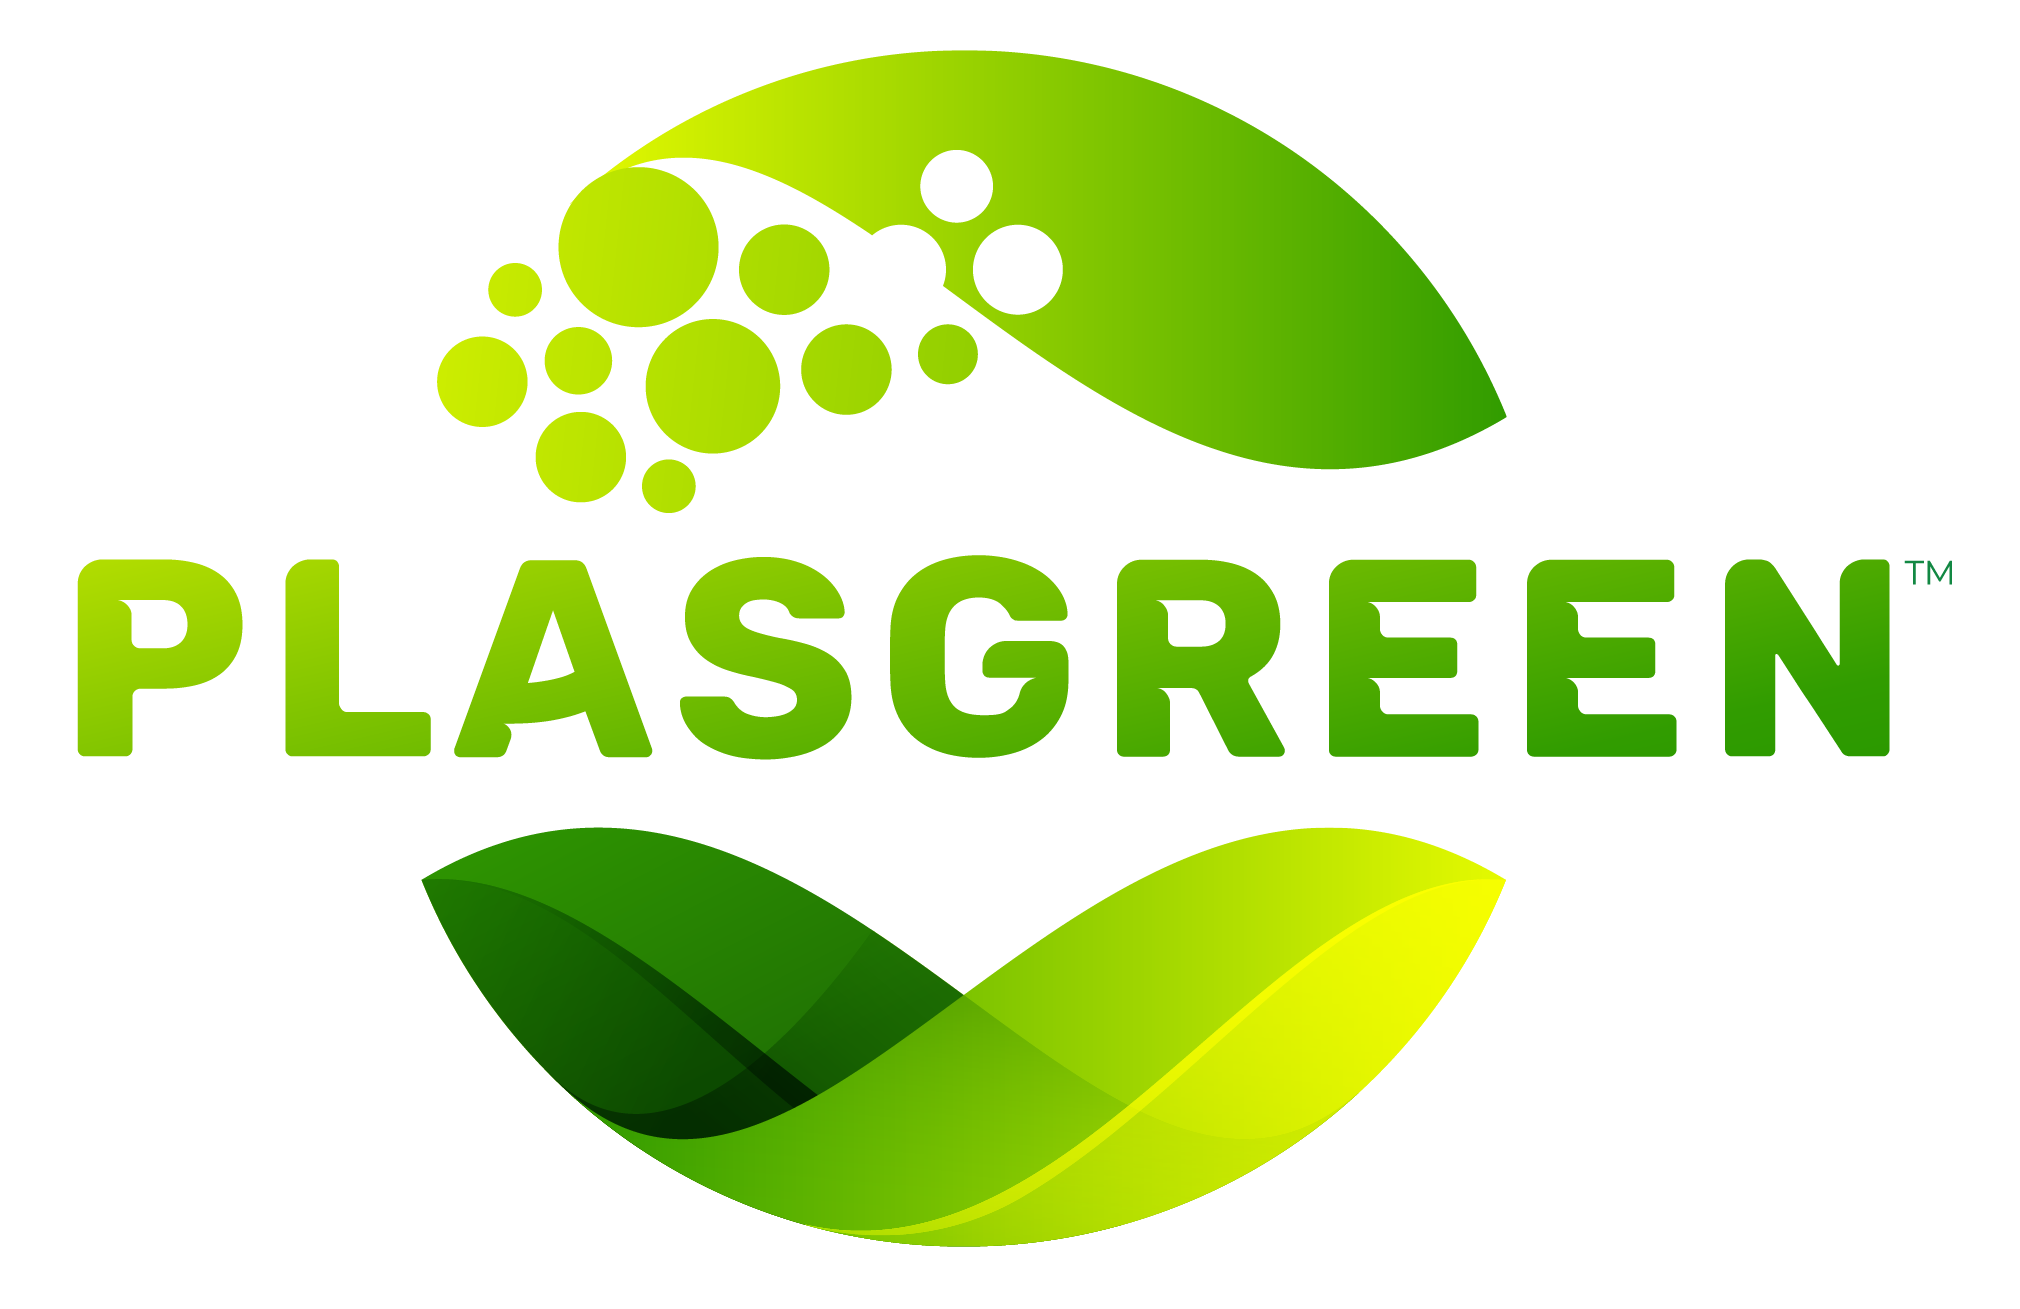 Plasgreen is a green plastic solution